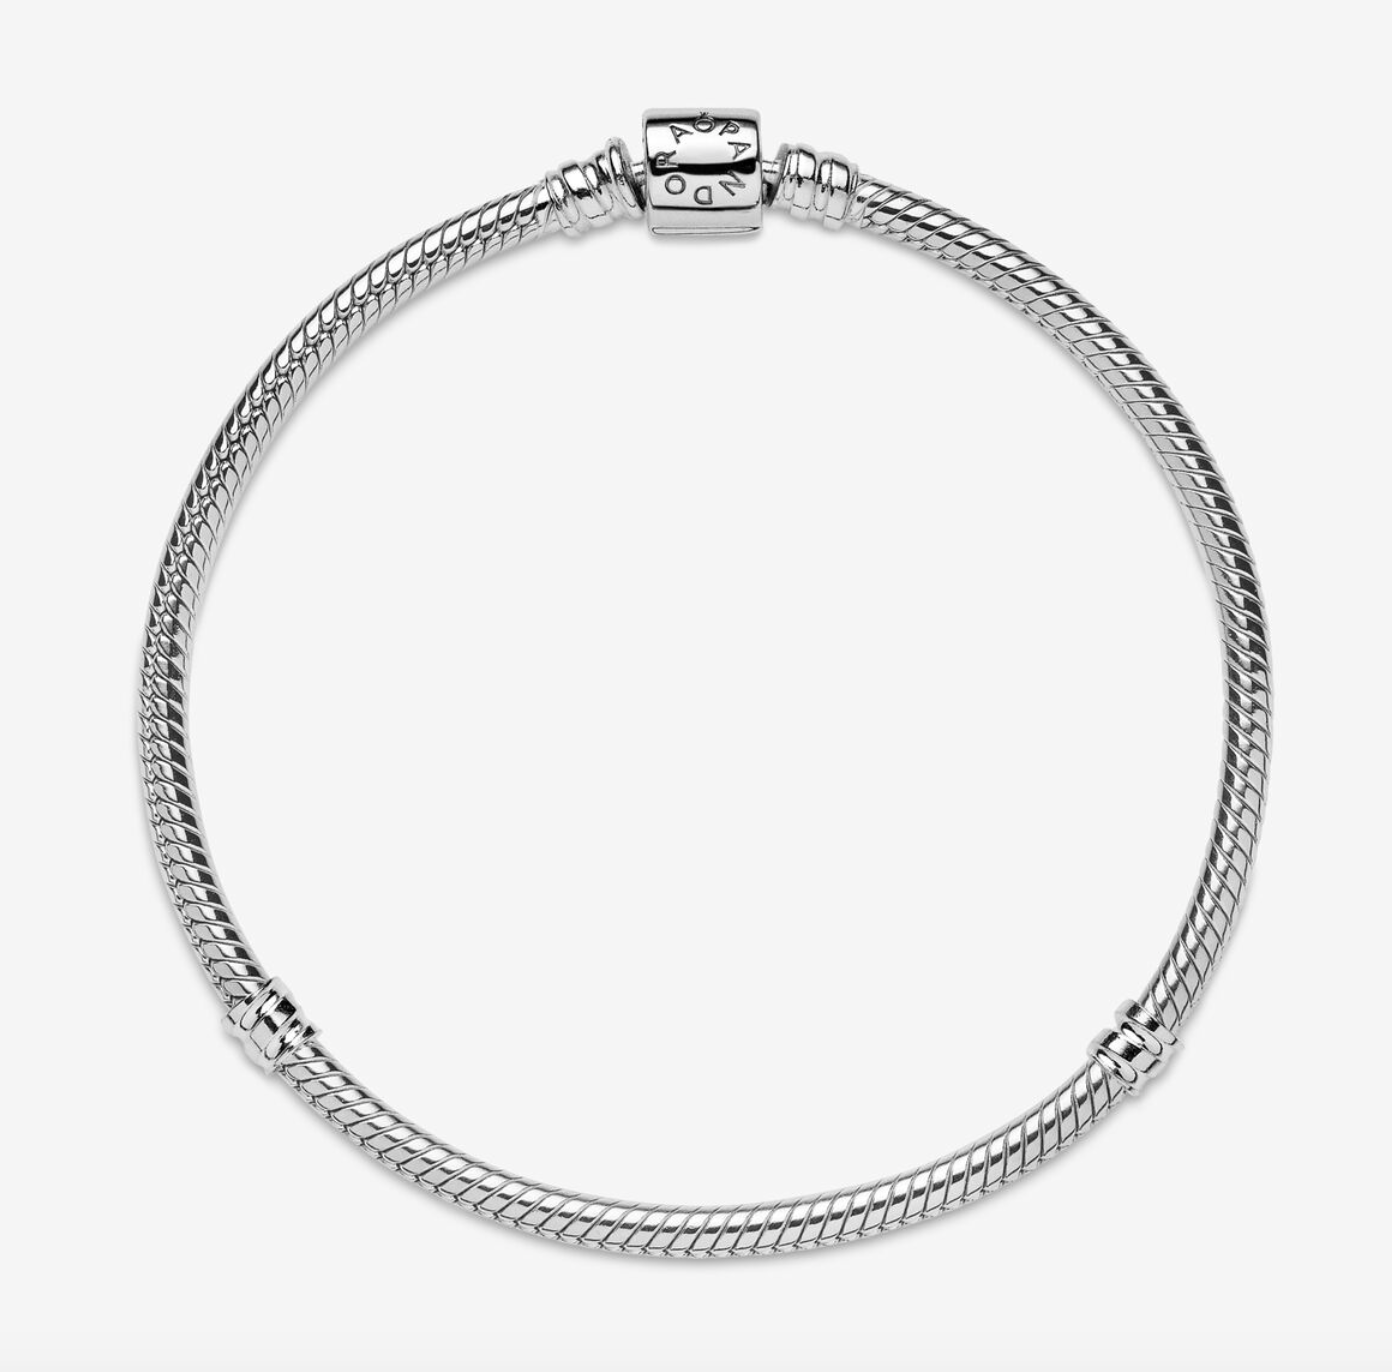 Pandora Moments Multi Snake Chain Bracelet - 599338C00, 21cm / 8.3in